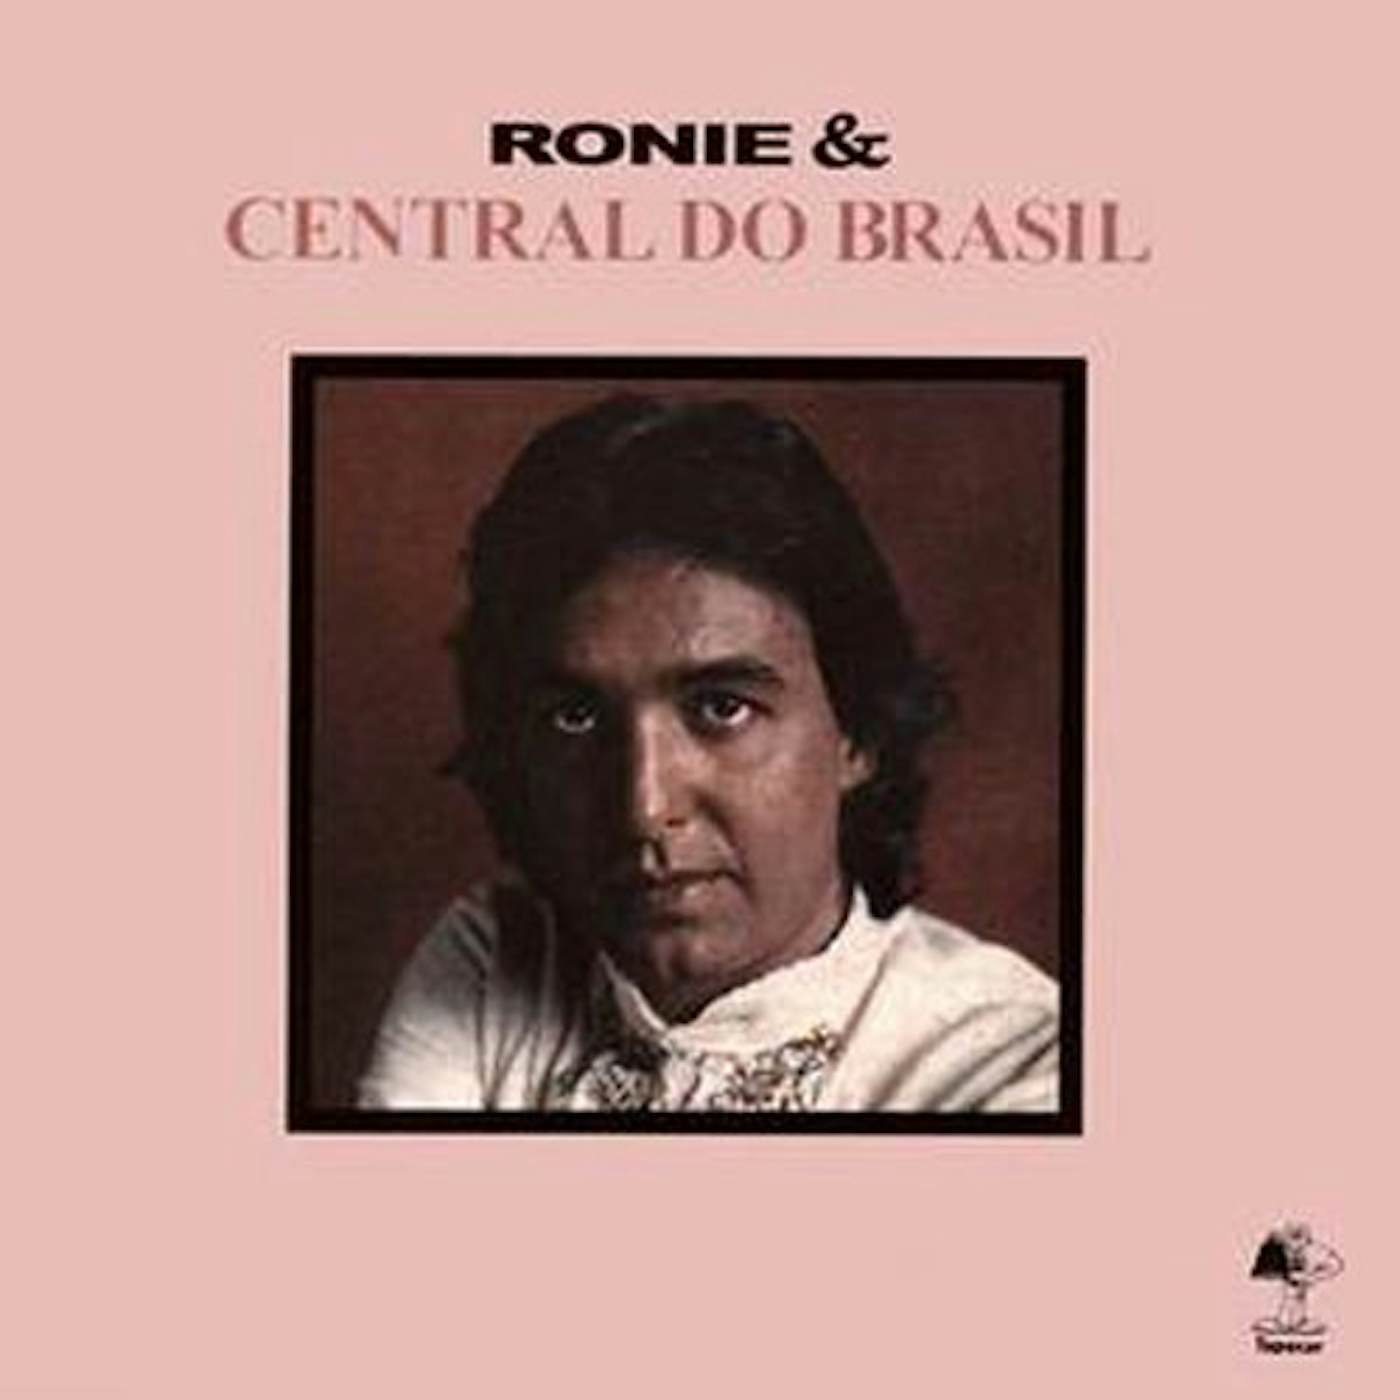 RONIE & CENTRAL DO BRASIL: LIMITED CD